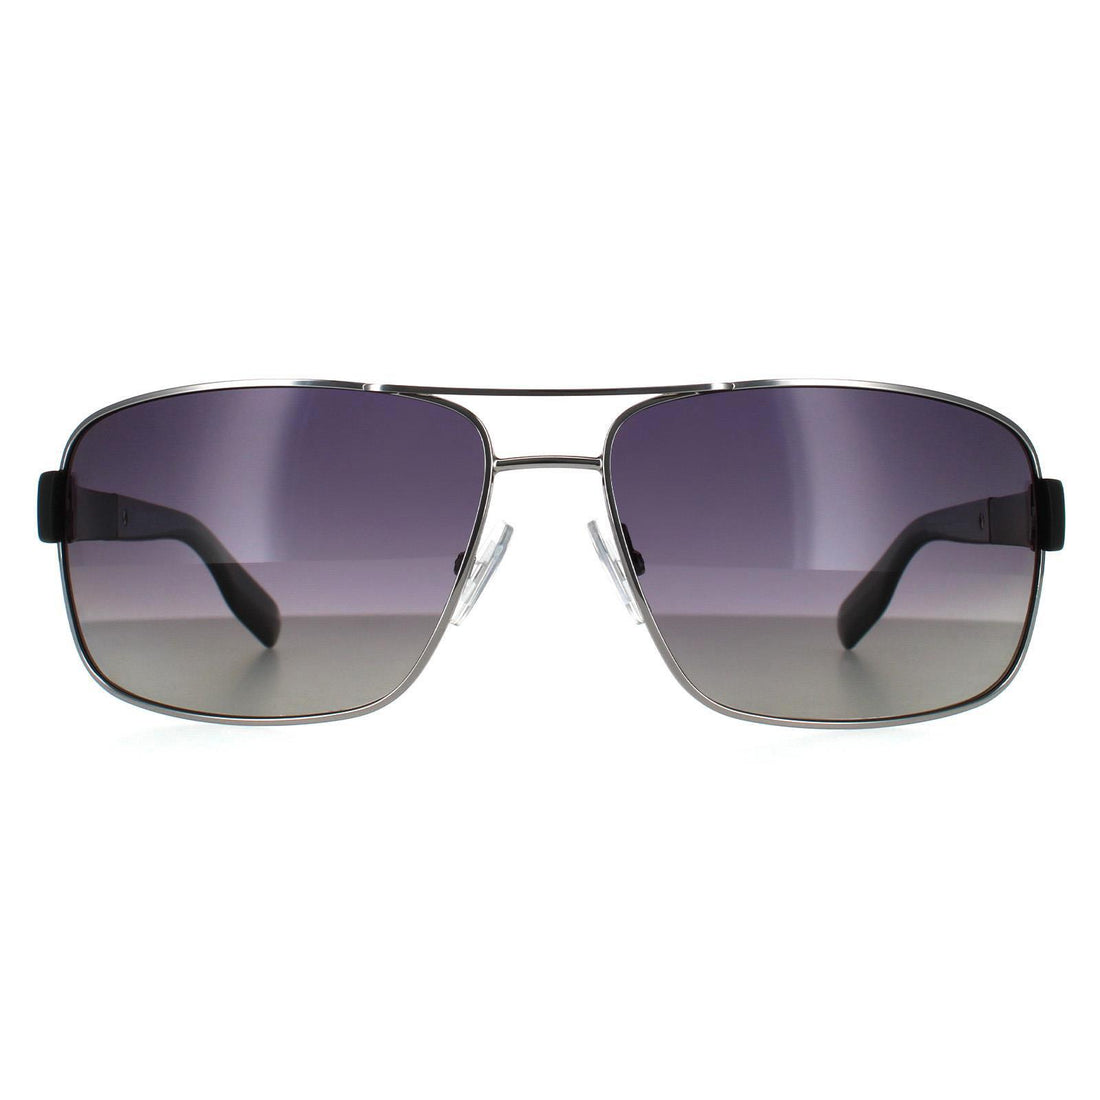 Hugo Boss 0521/S Sunglasses Ruthenium / Grey Gradient Polarized